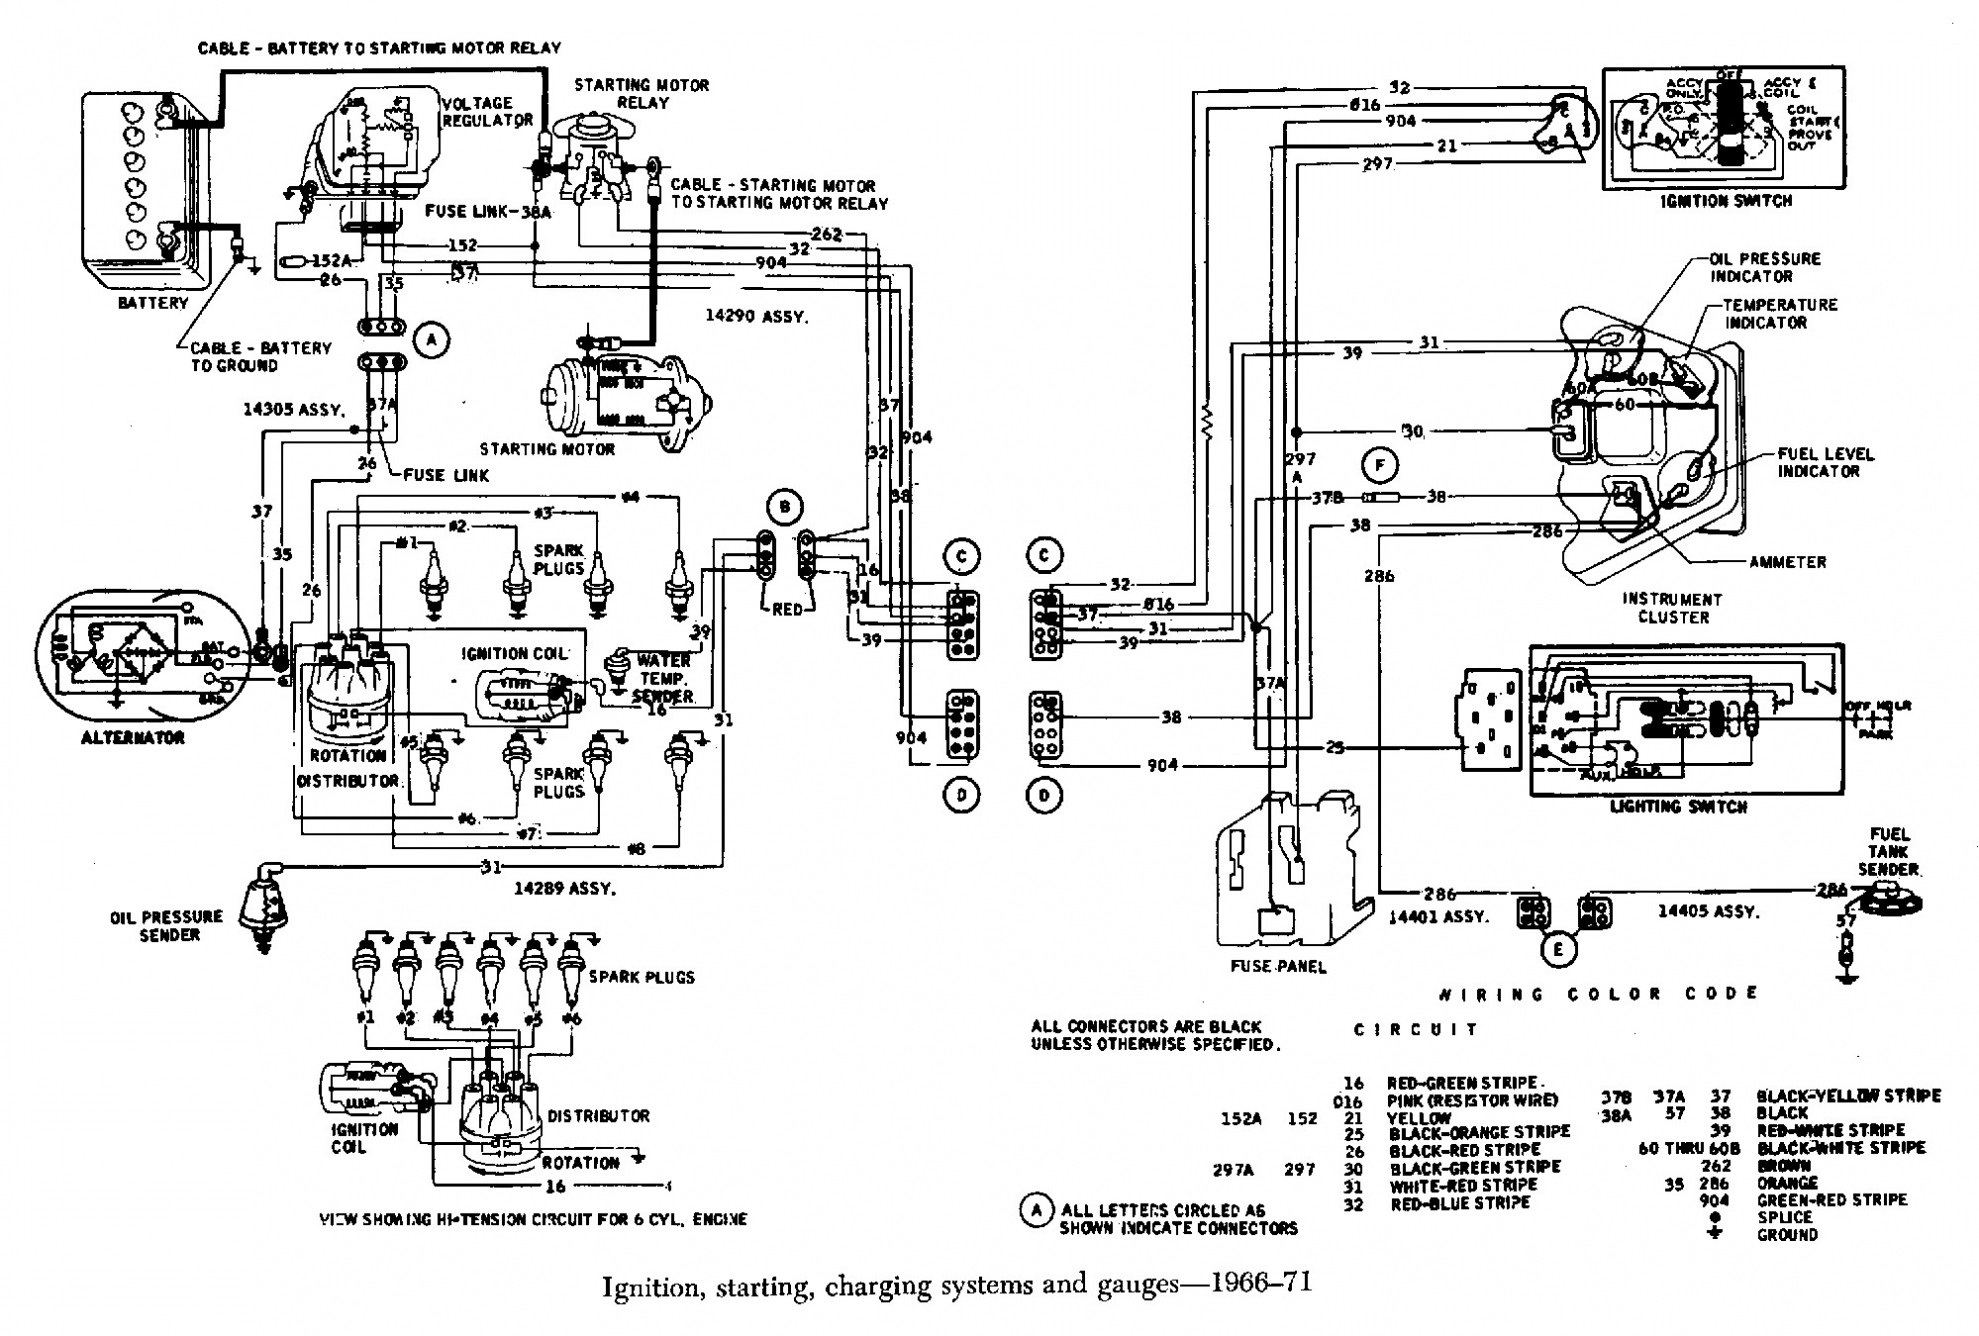 Plug Wiring Diagram Inspirational 50 Amp Twist Lock Plug Wiring - 50 Amp Twist Lock Plug Wiring Diagram